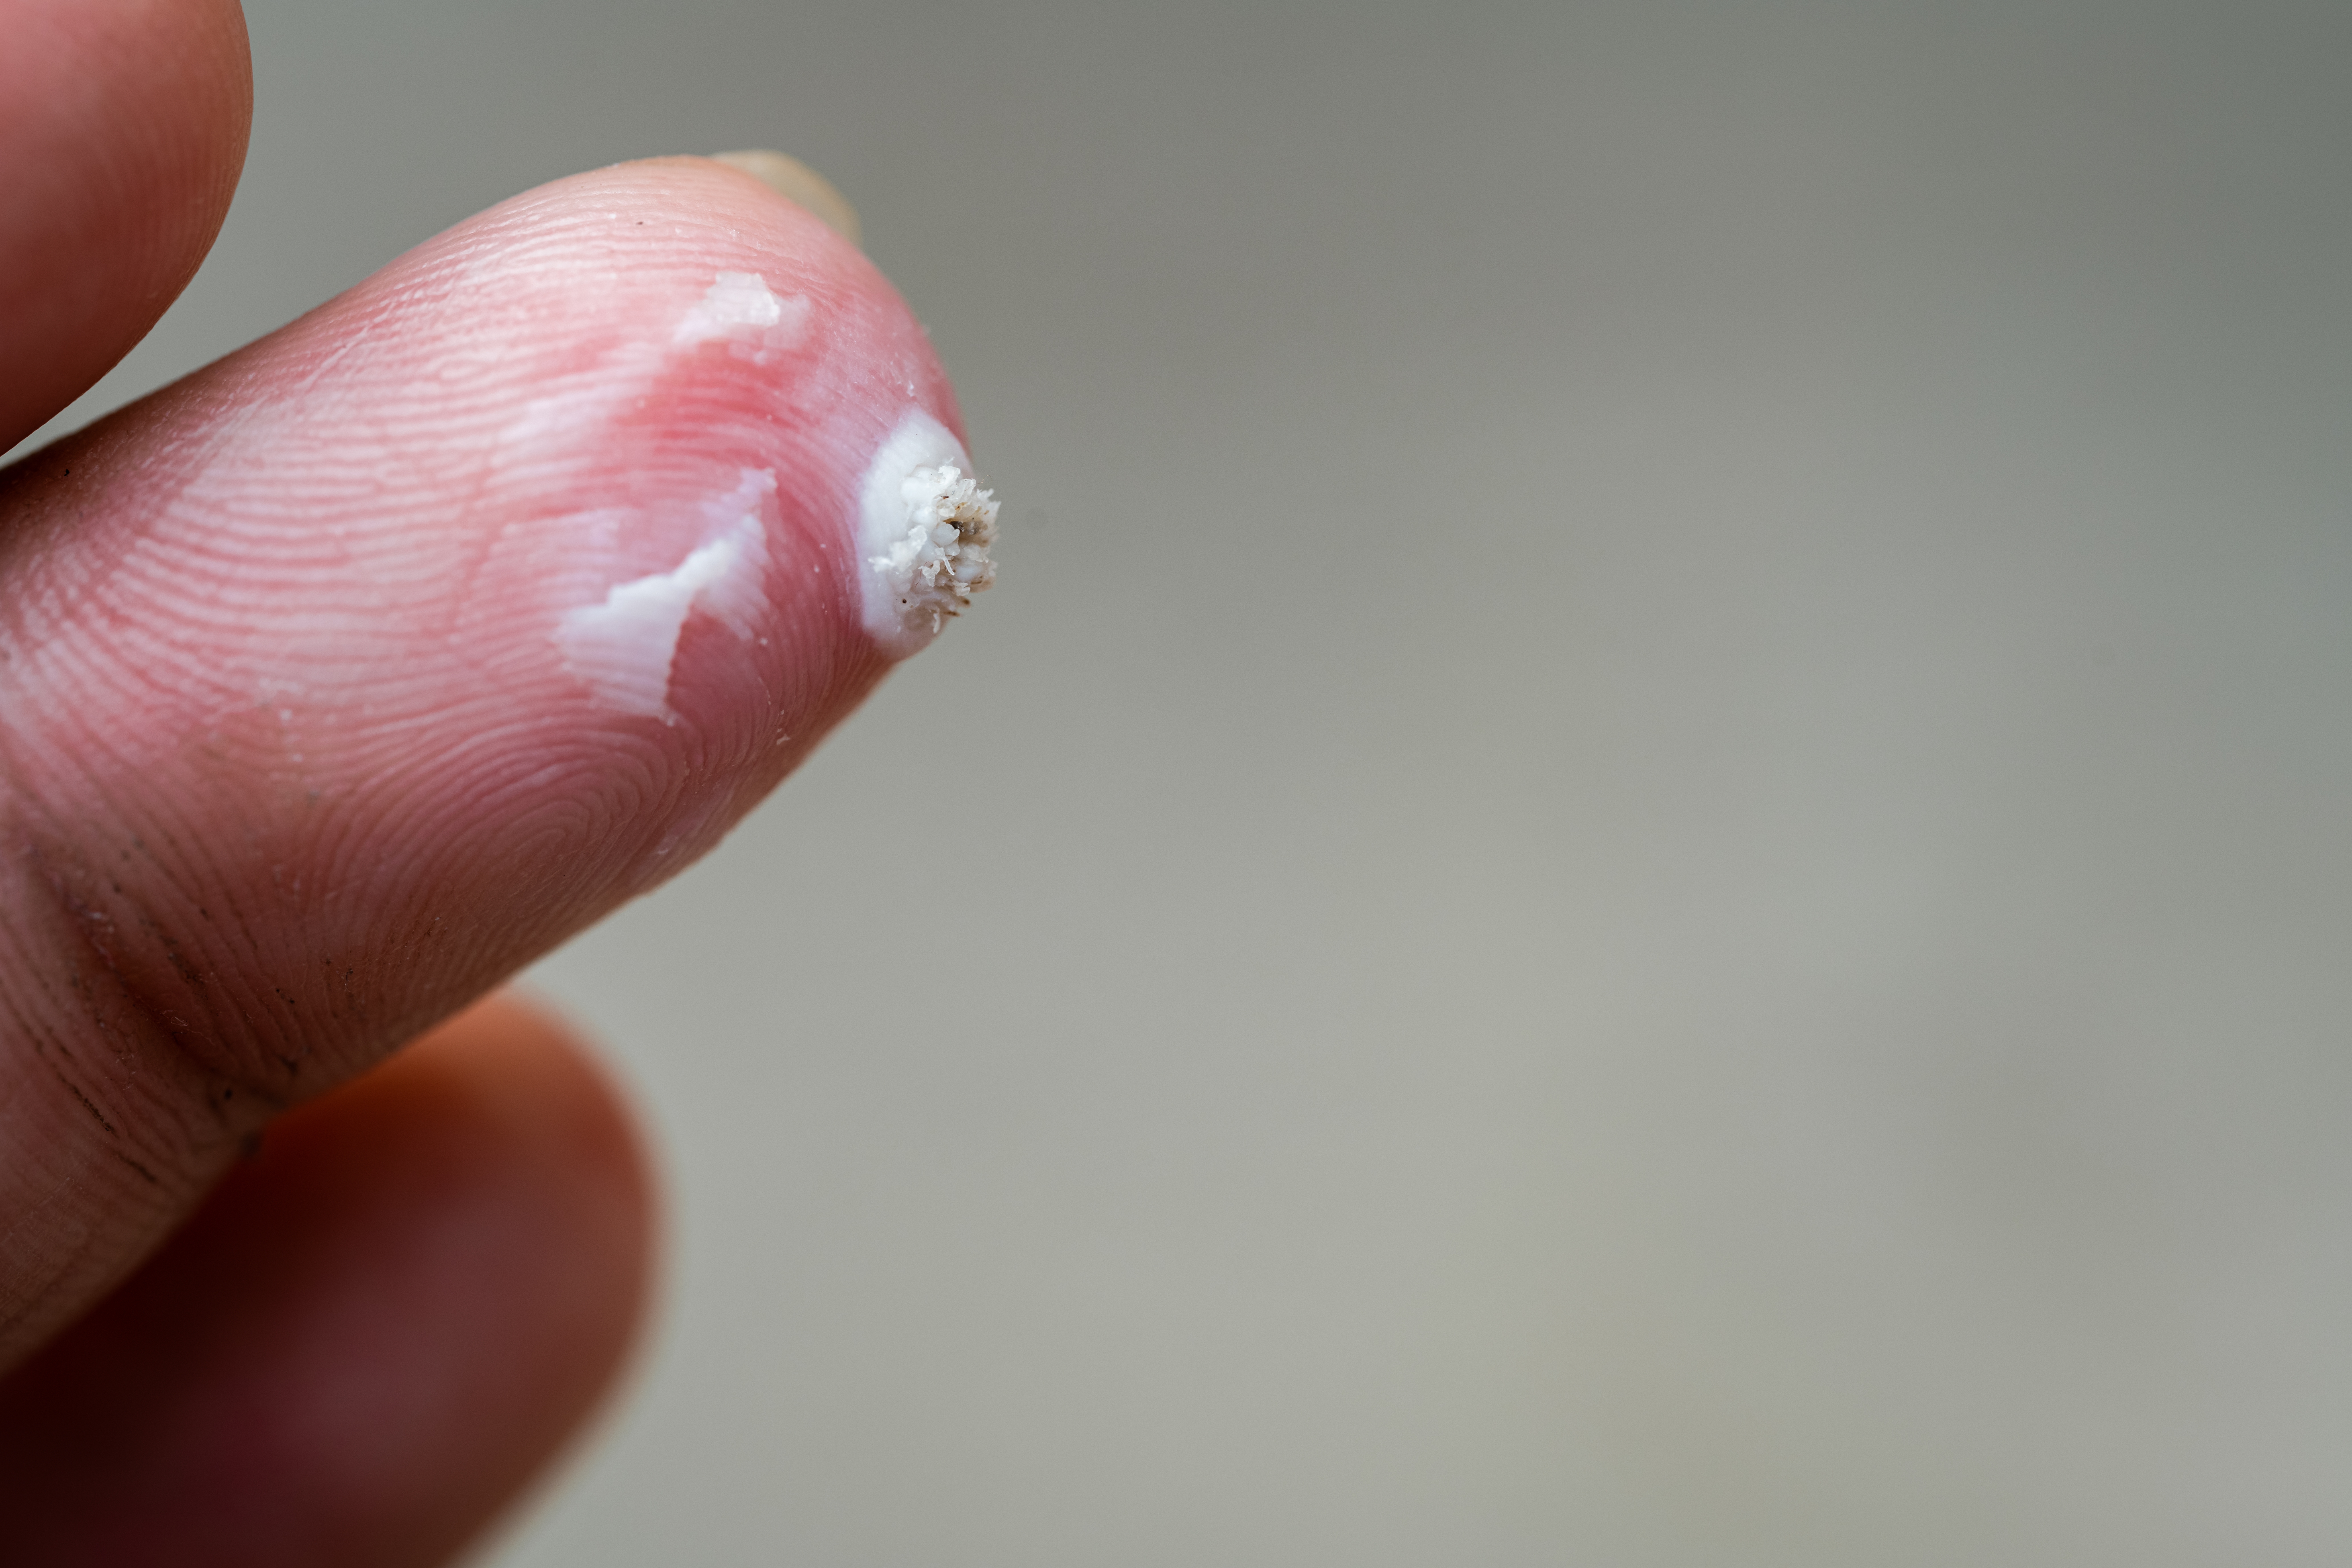 White warts on fingertips, skin disease being treated.